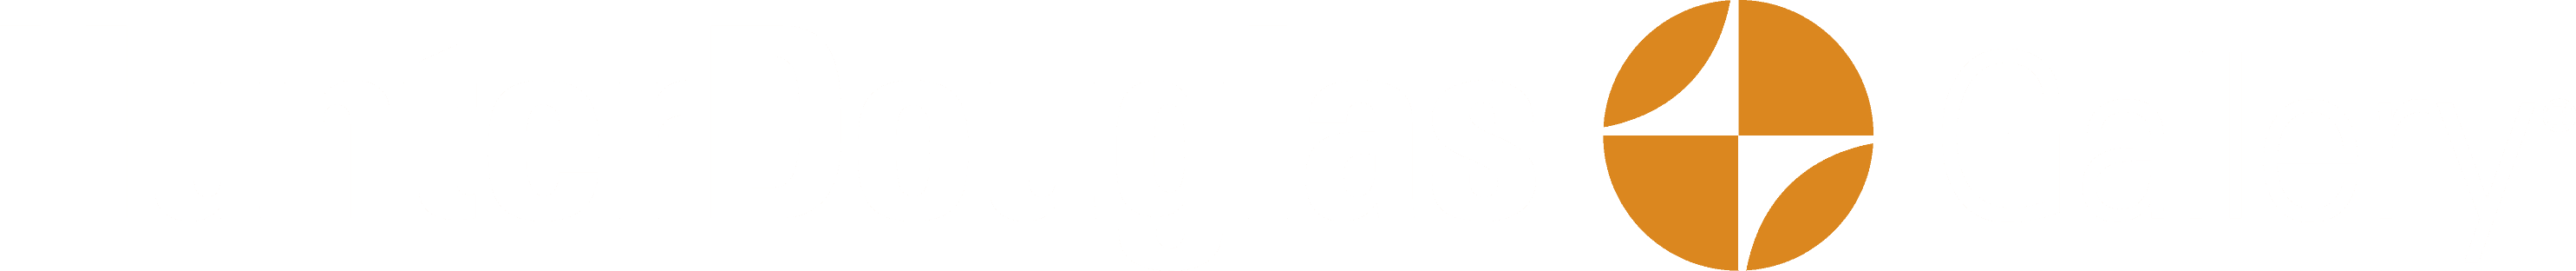 HD Gallery Logo